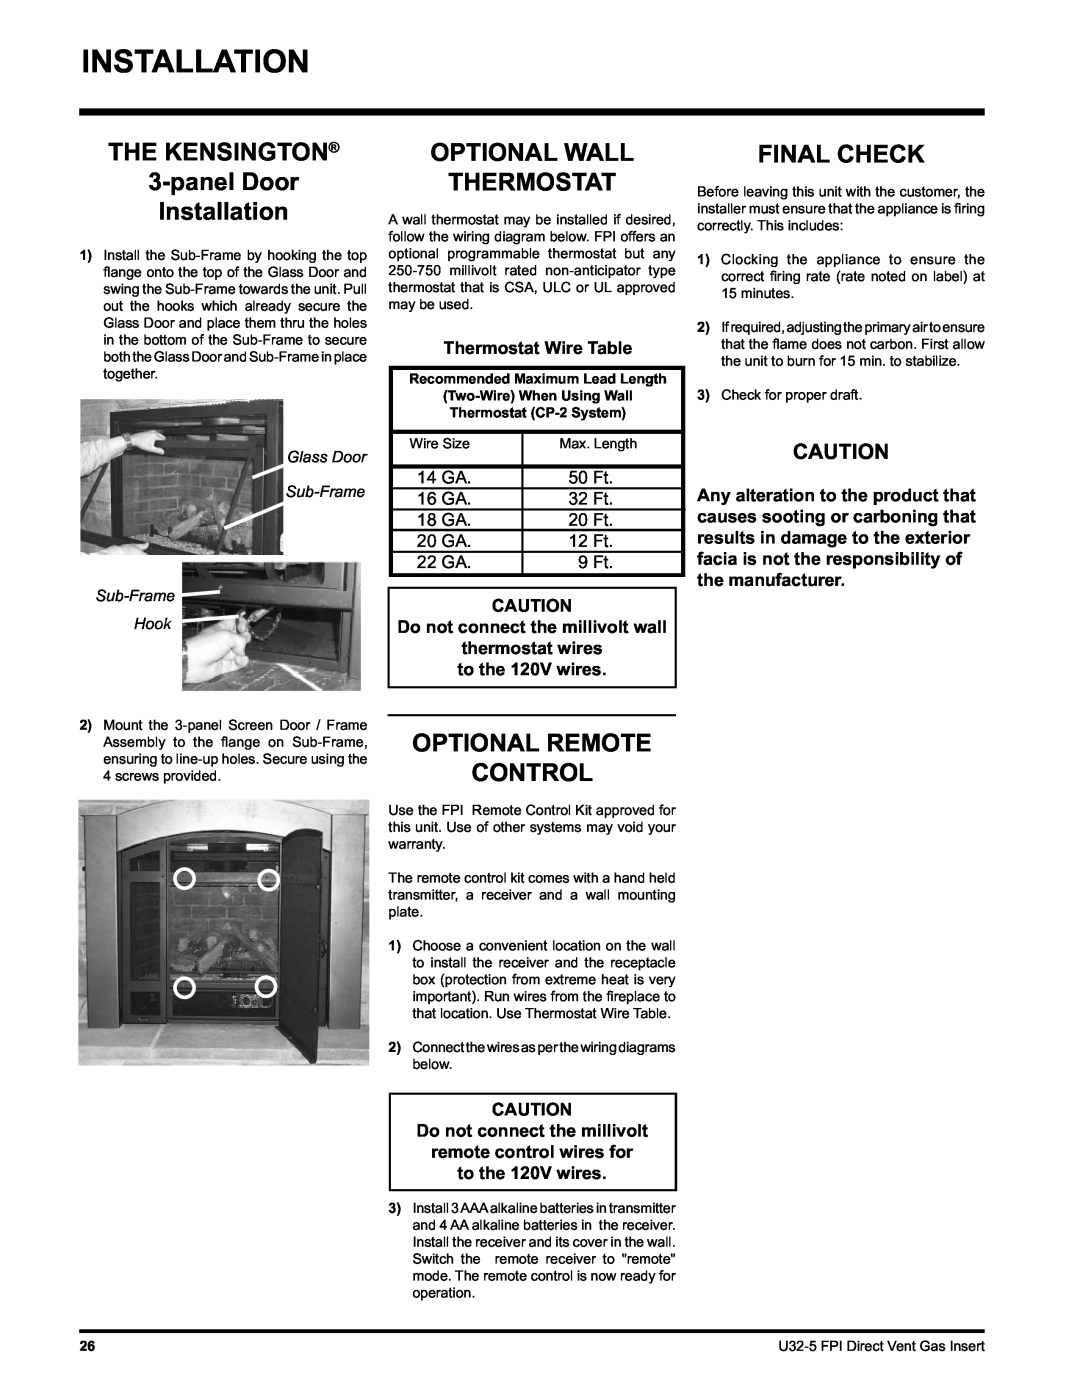 Hampton Direct U32 installation manual THE KENSINGTON 3-panelDoor Installation, Optional Wall Thermostat, Final Check 